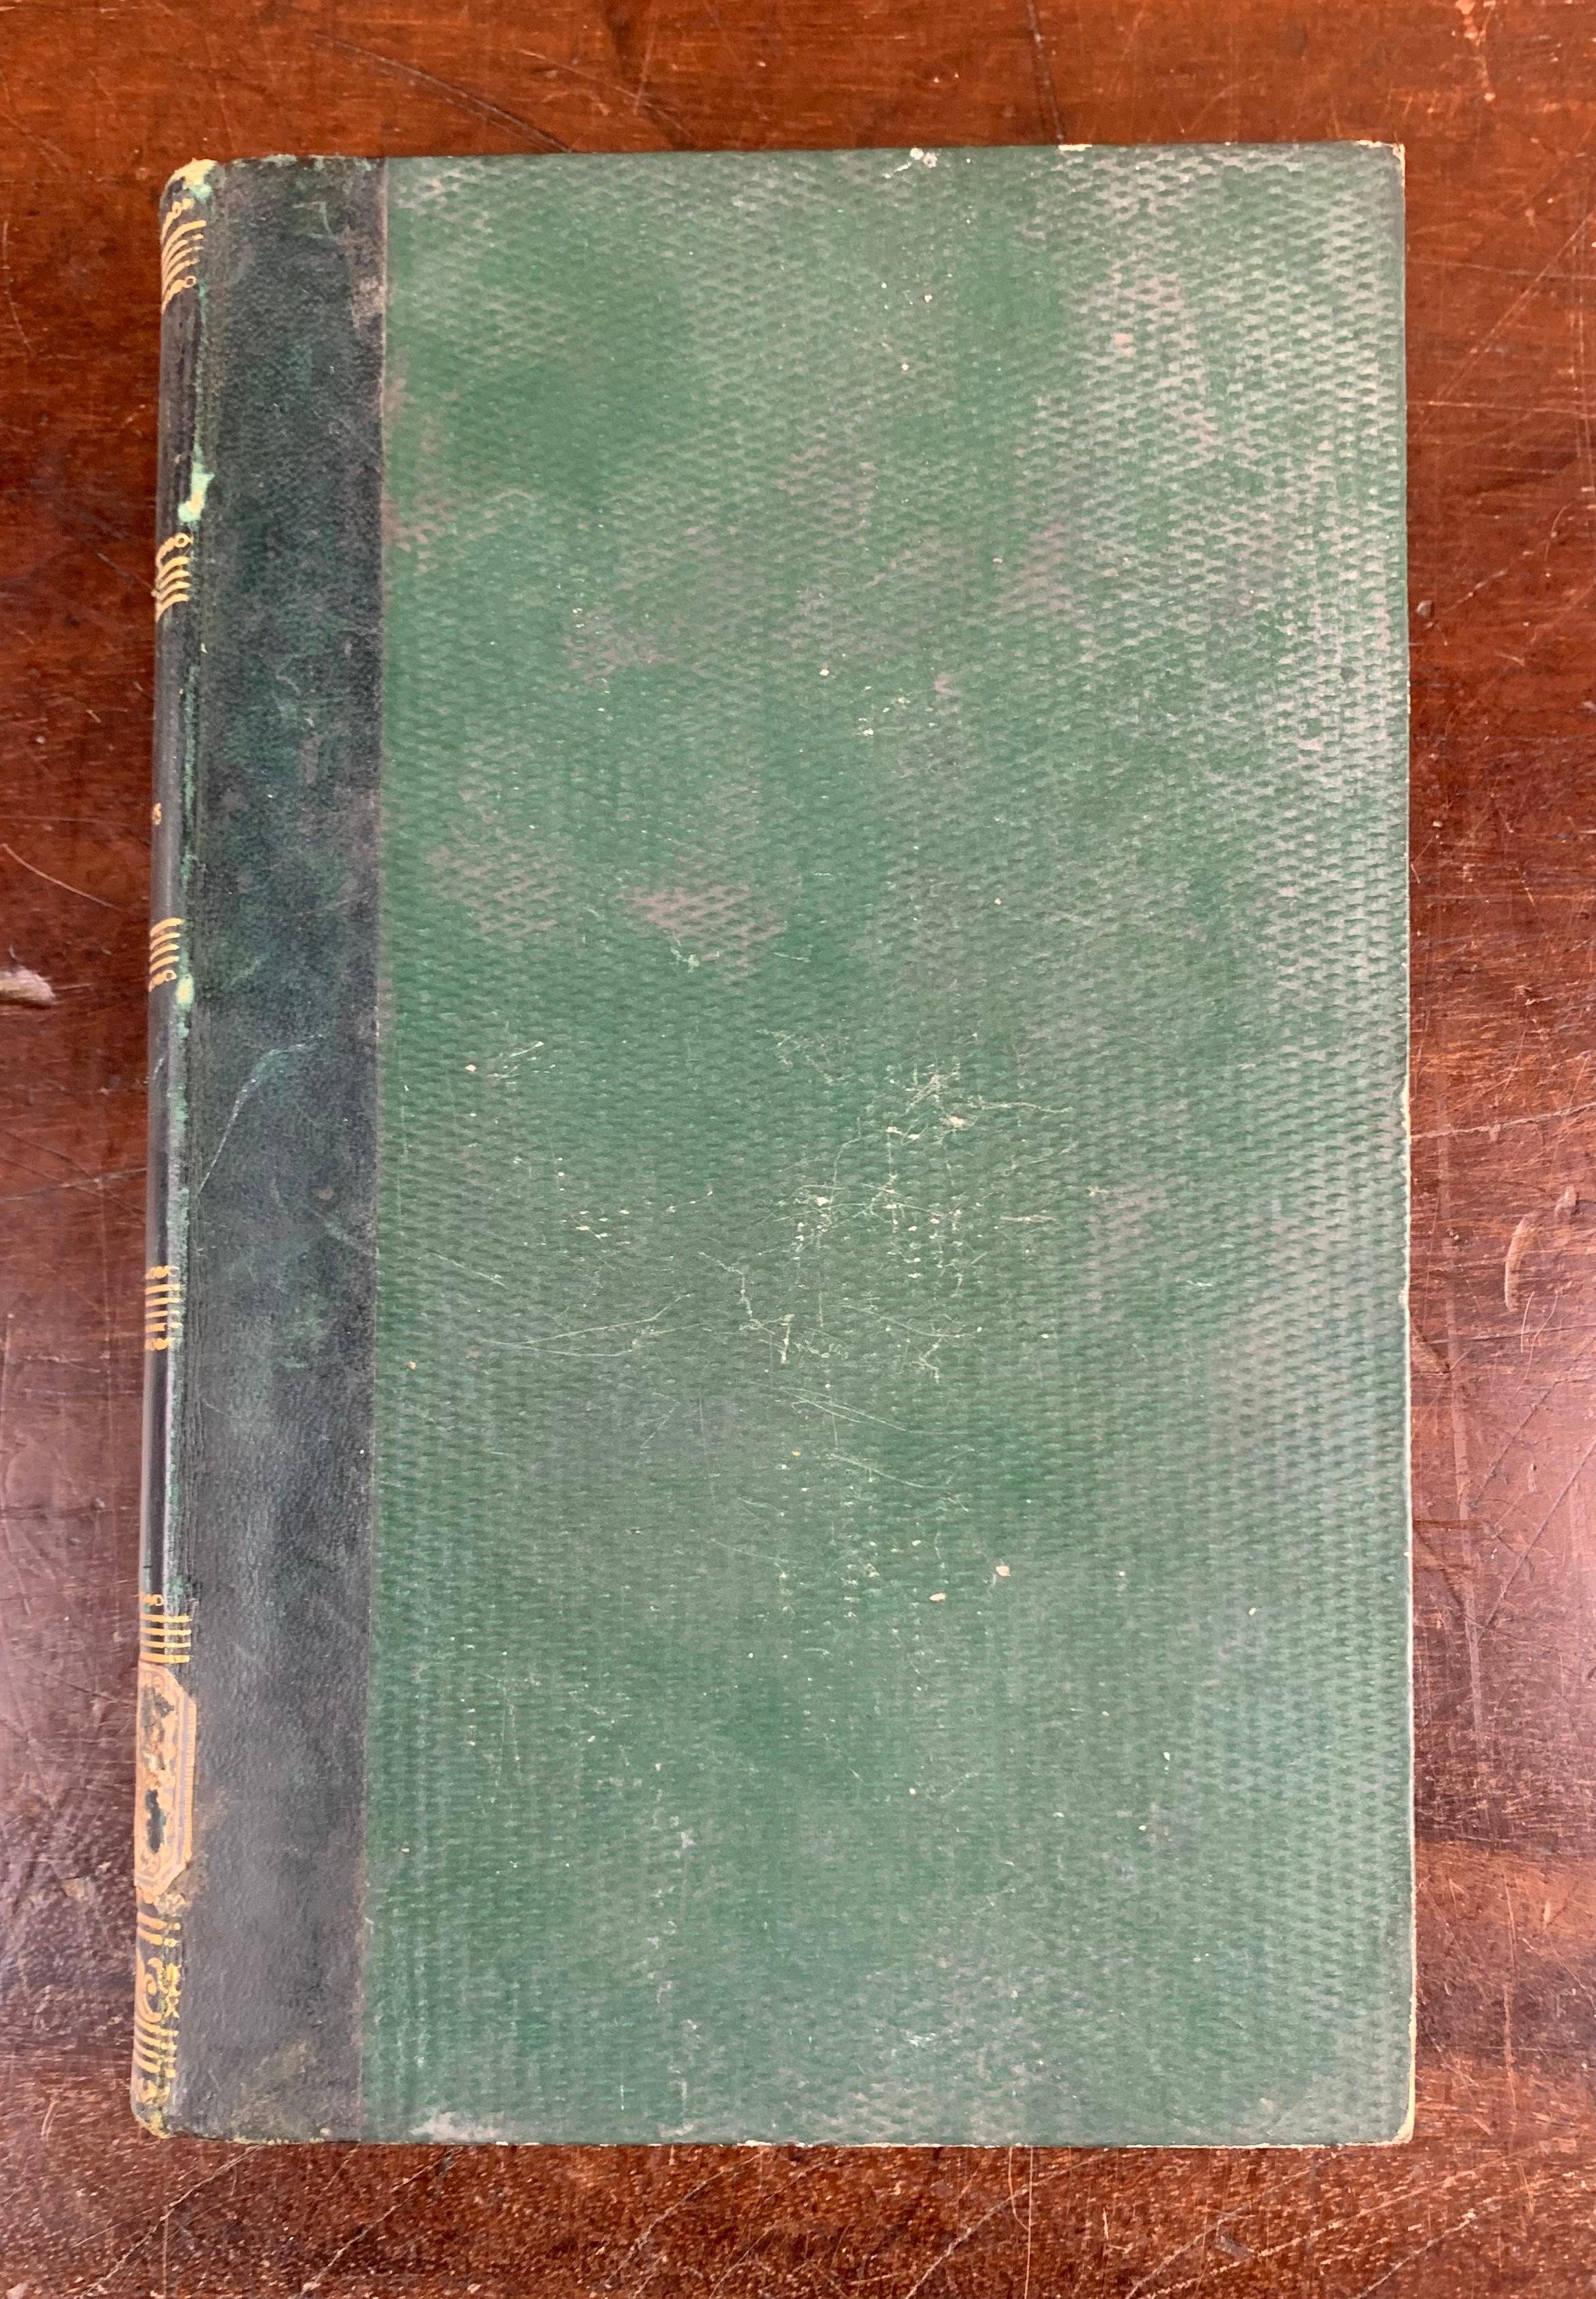 19th century journal